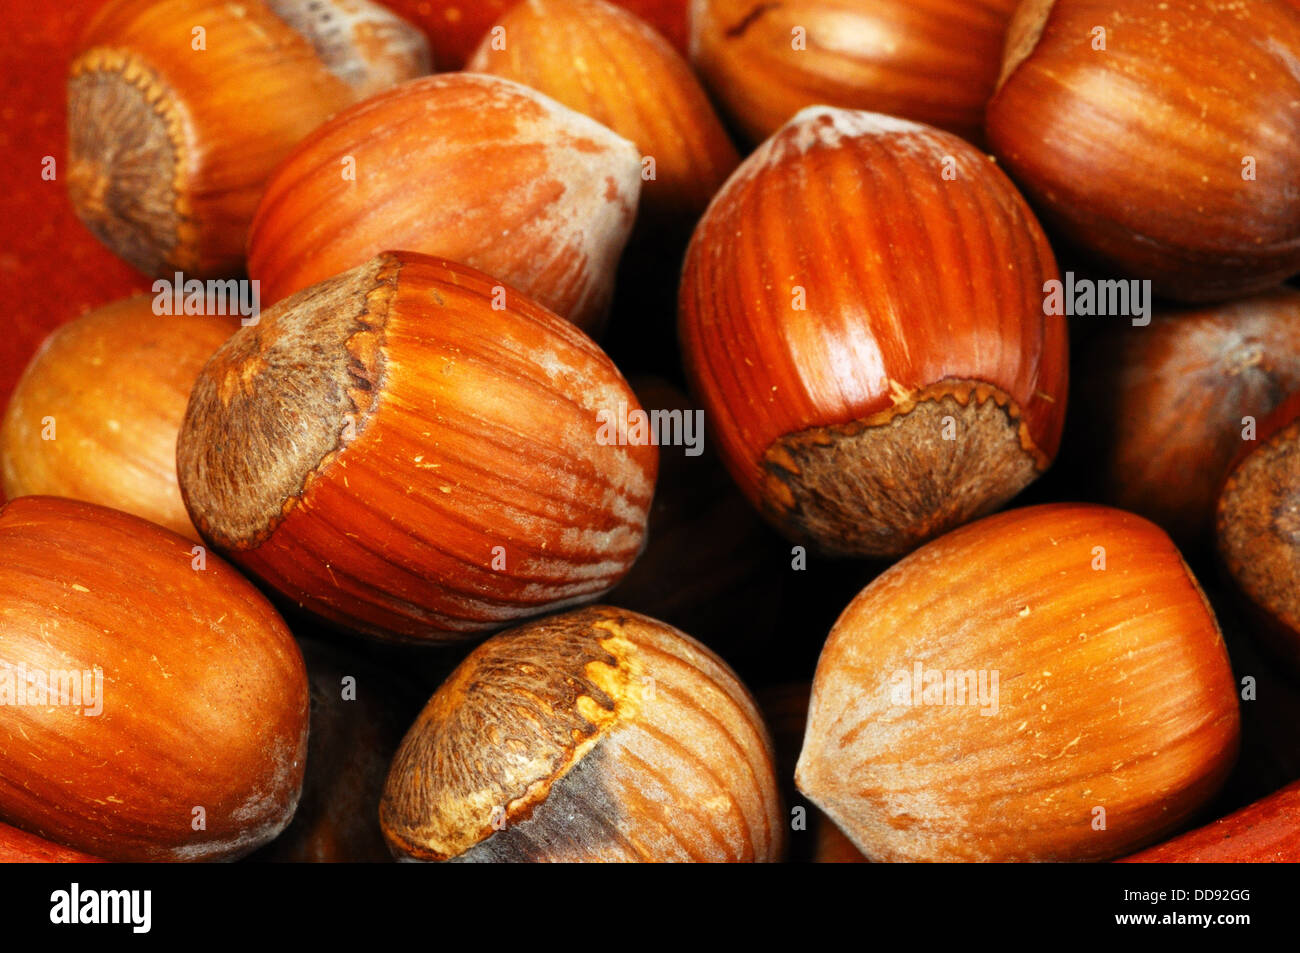 Hazelnuts in their shells. Stock Photo